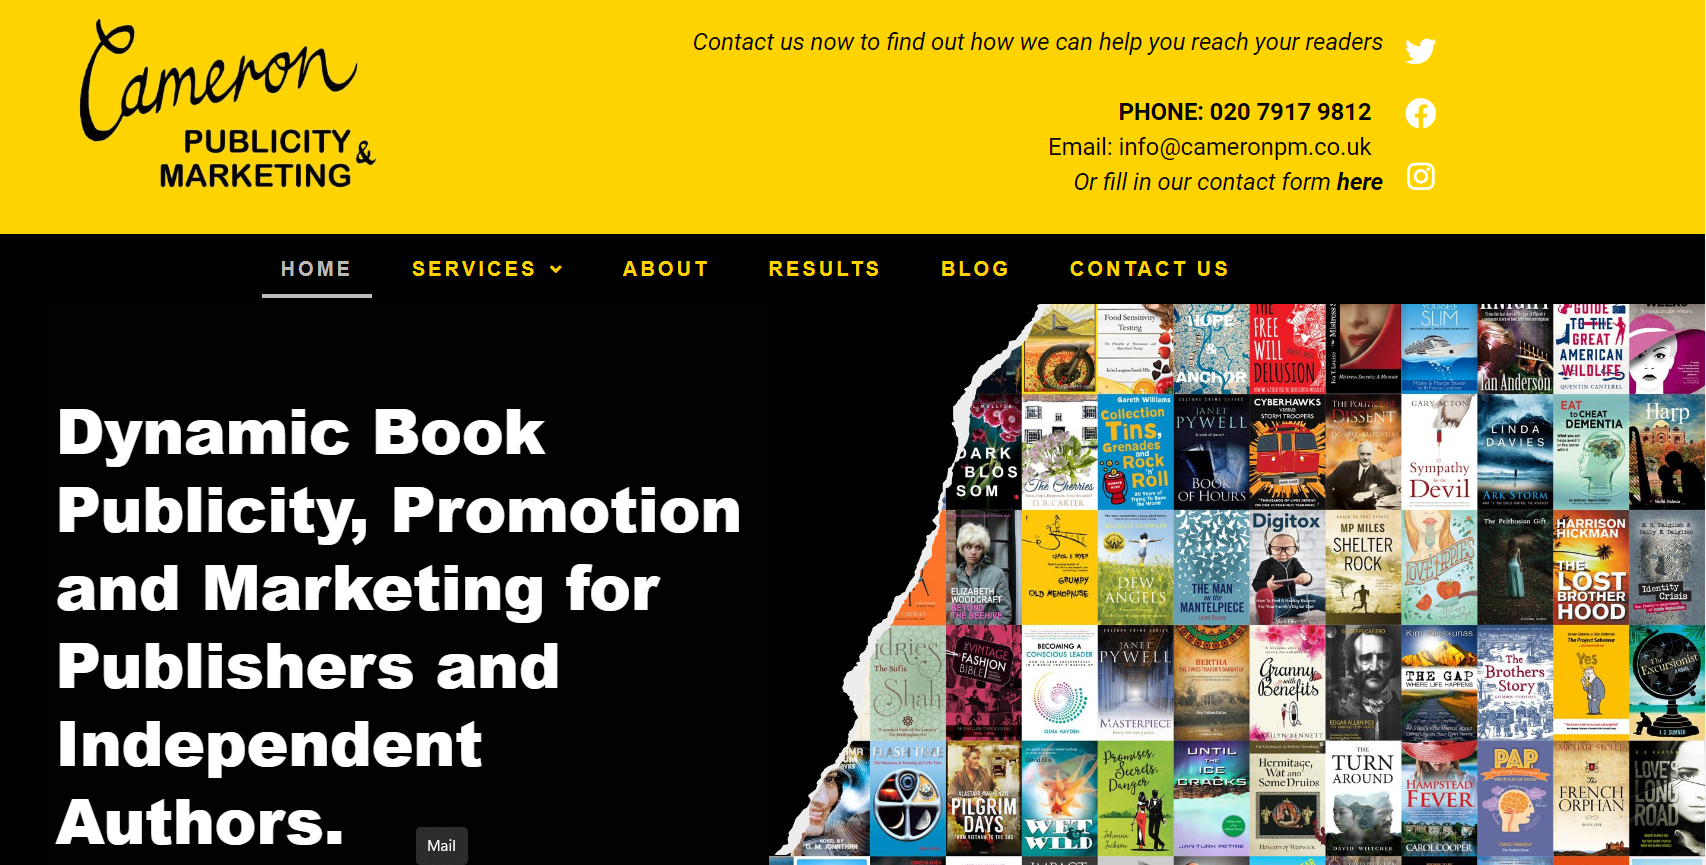 Cameron PM book marketing company homepage